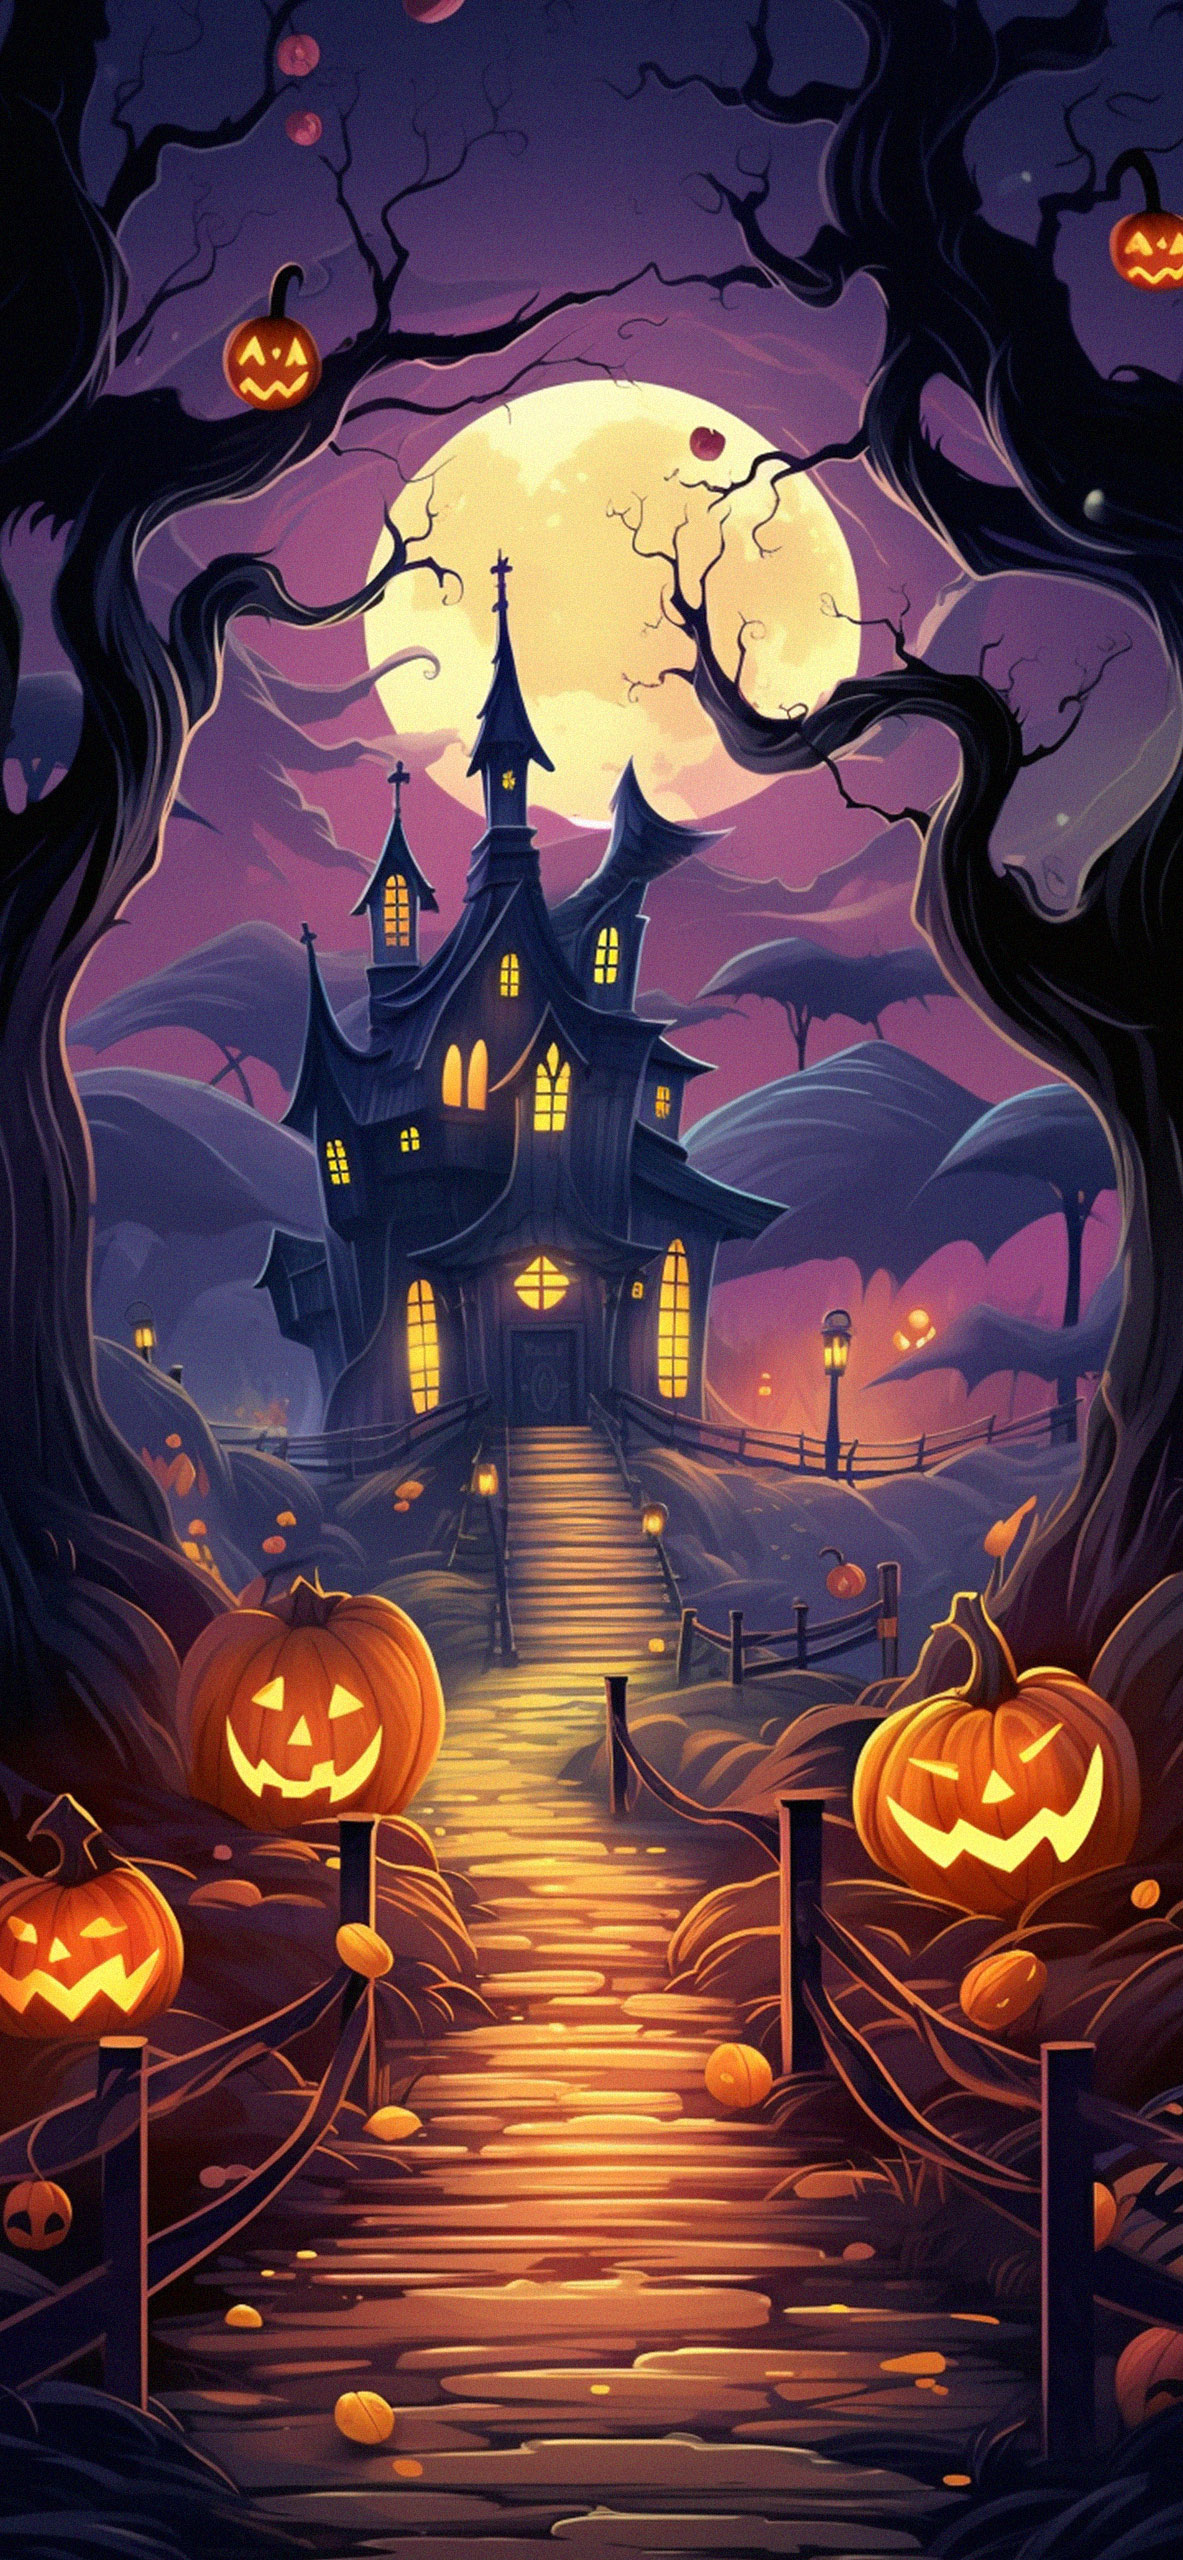 Сartoon style halloween wallpaper Halloween aesthetic wallpap